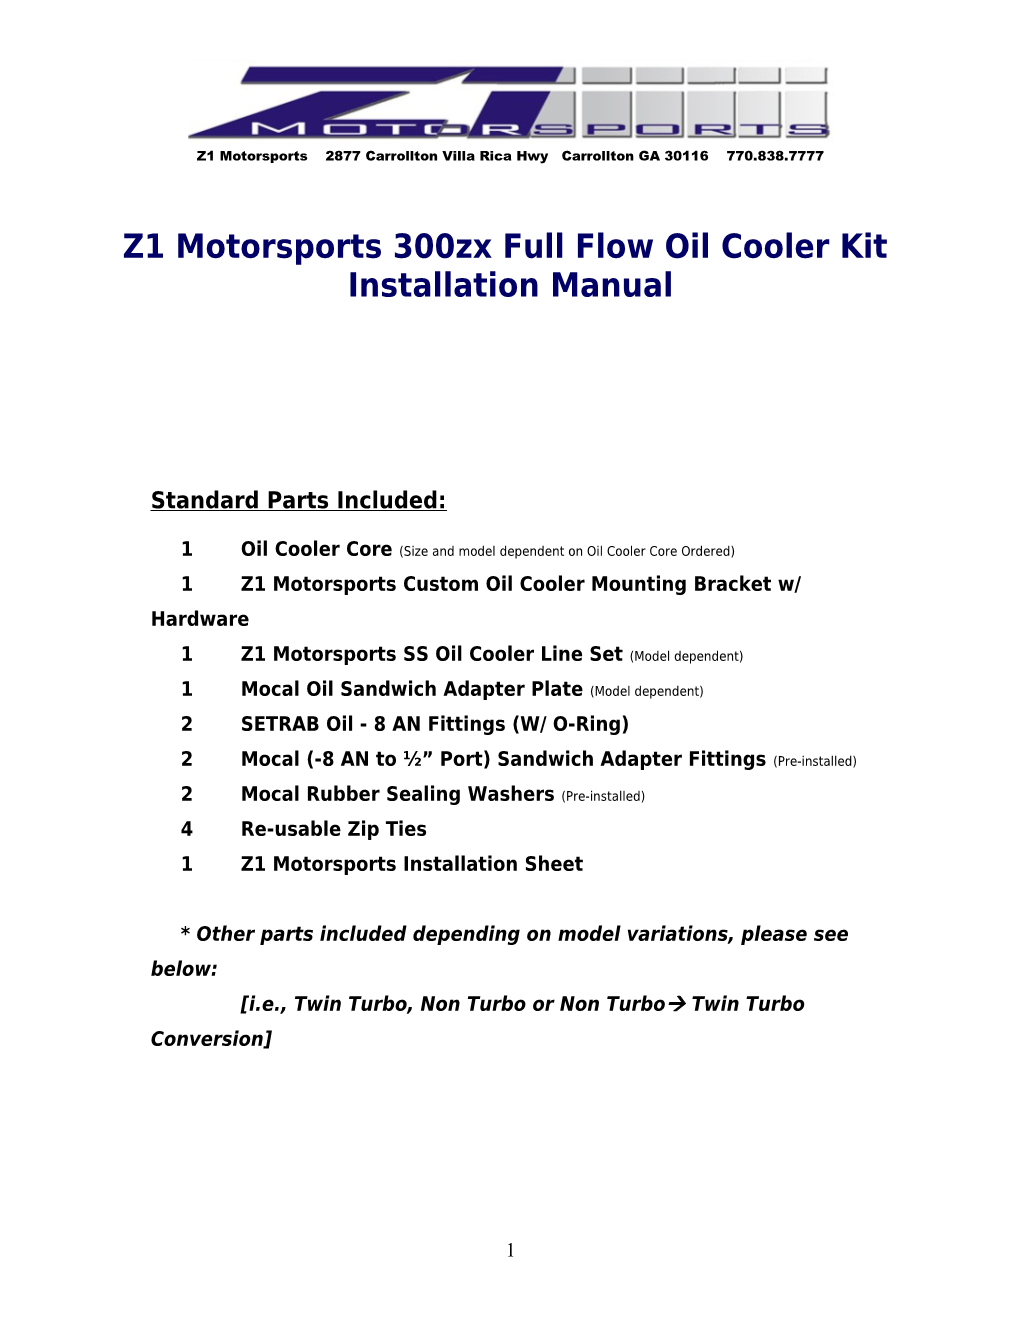 Z1 Motorsports 300Zx Full Flow Oil Cooler Kit